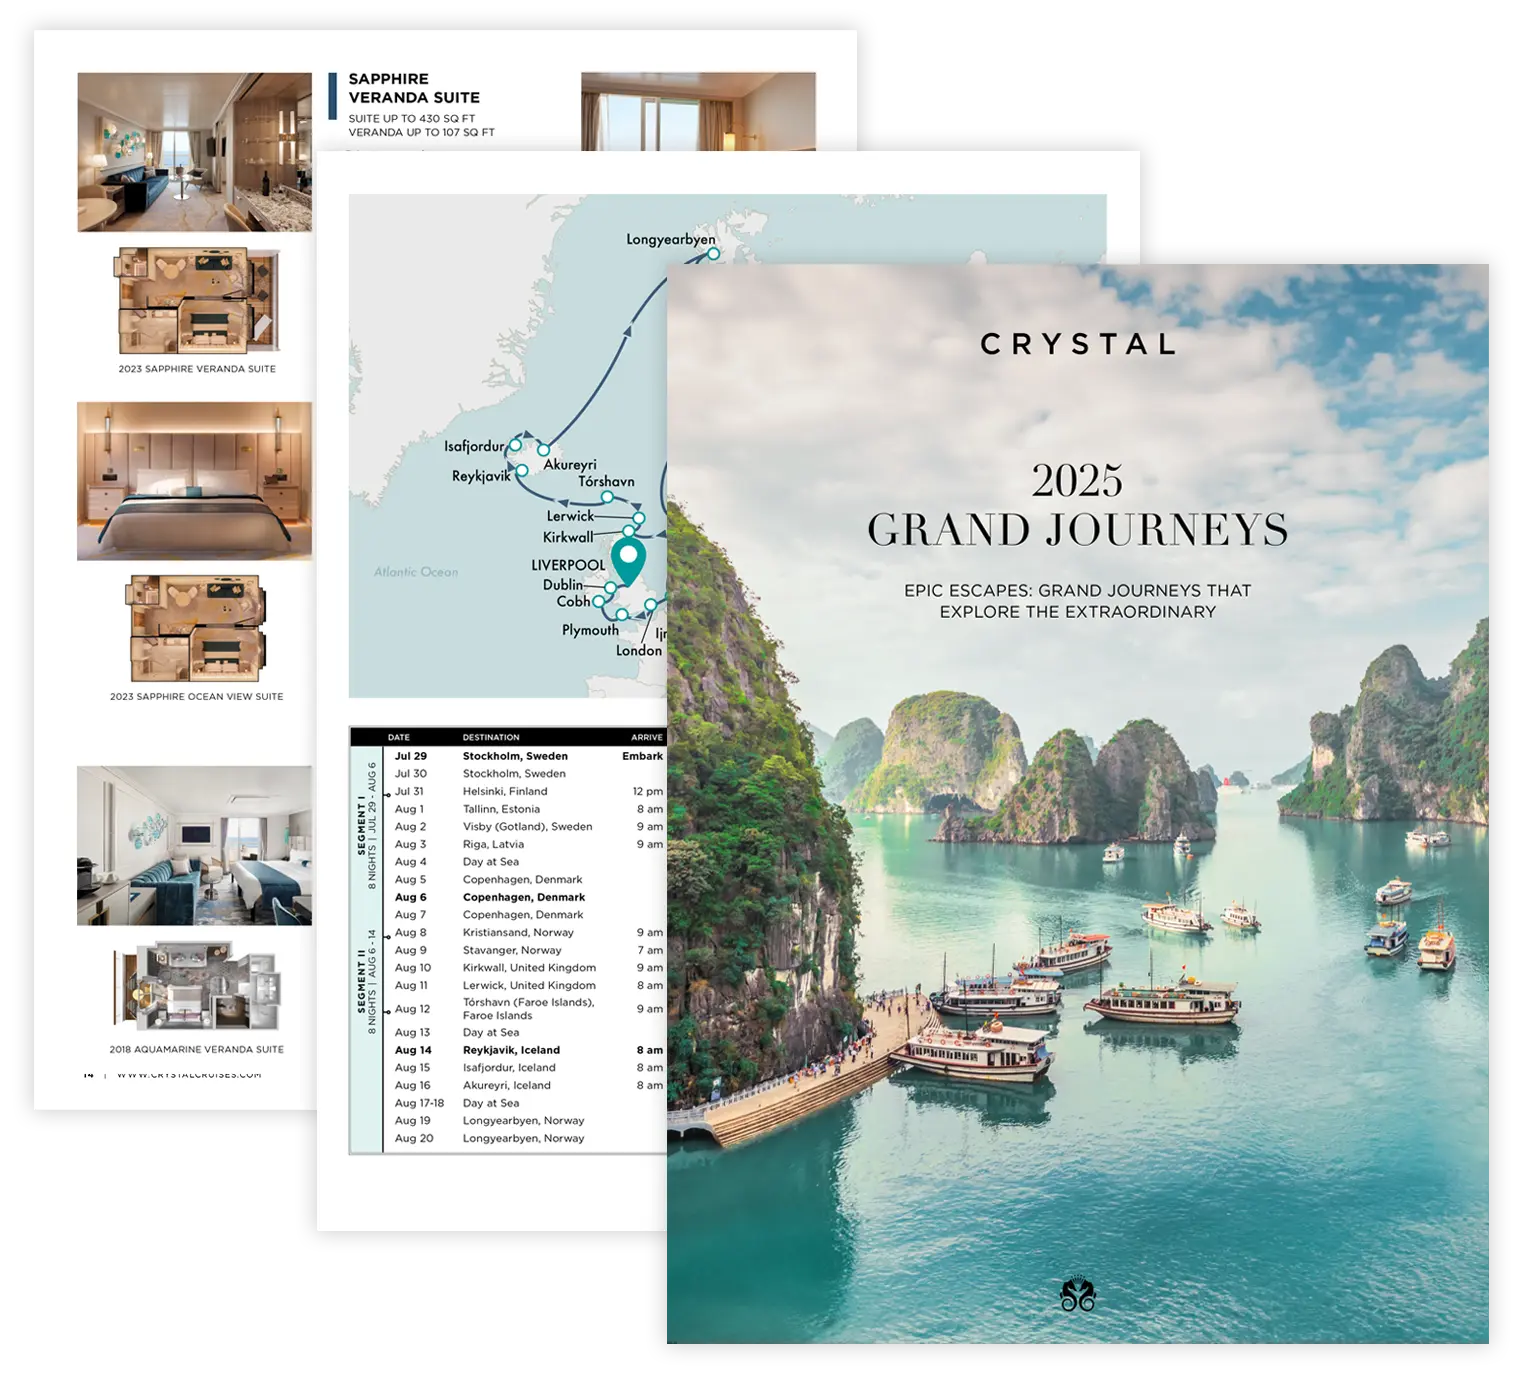 crystal cruises e-brochure 2025 grand journeys